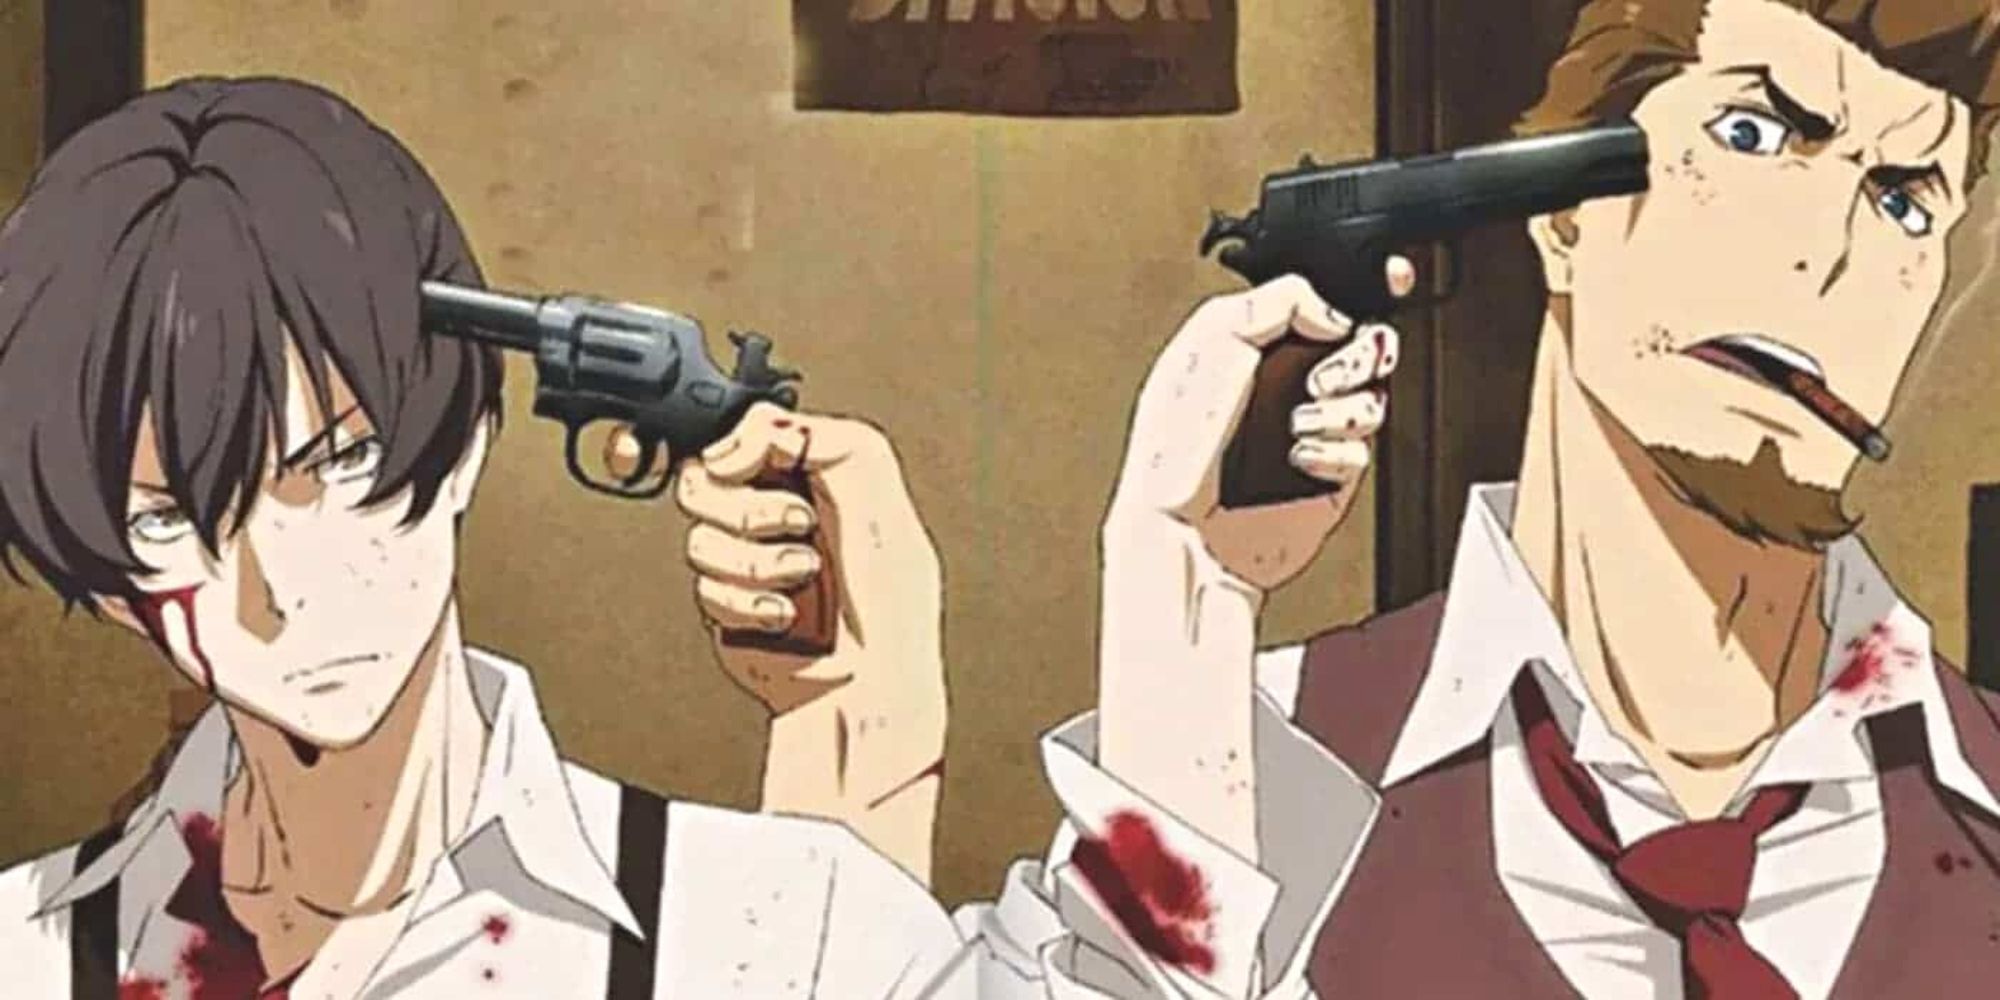 gangster anime by rager68 on DeviantArt